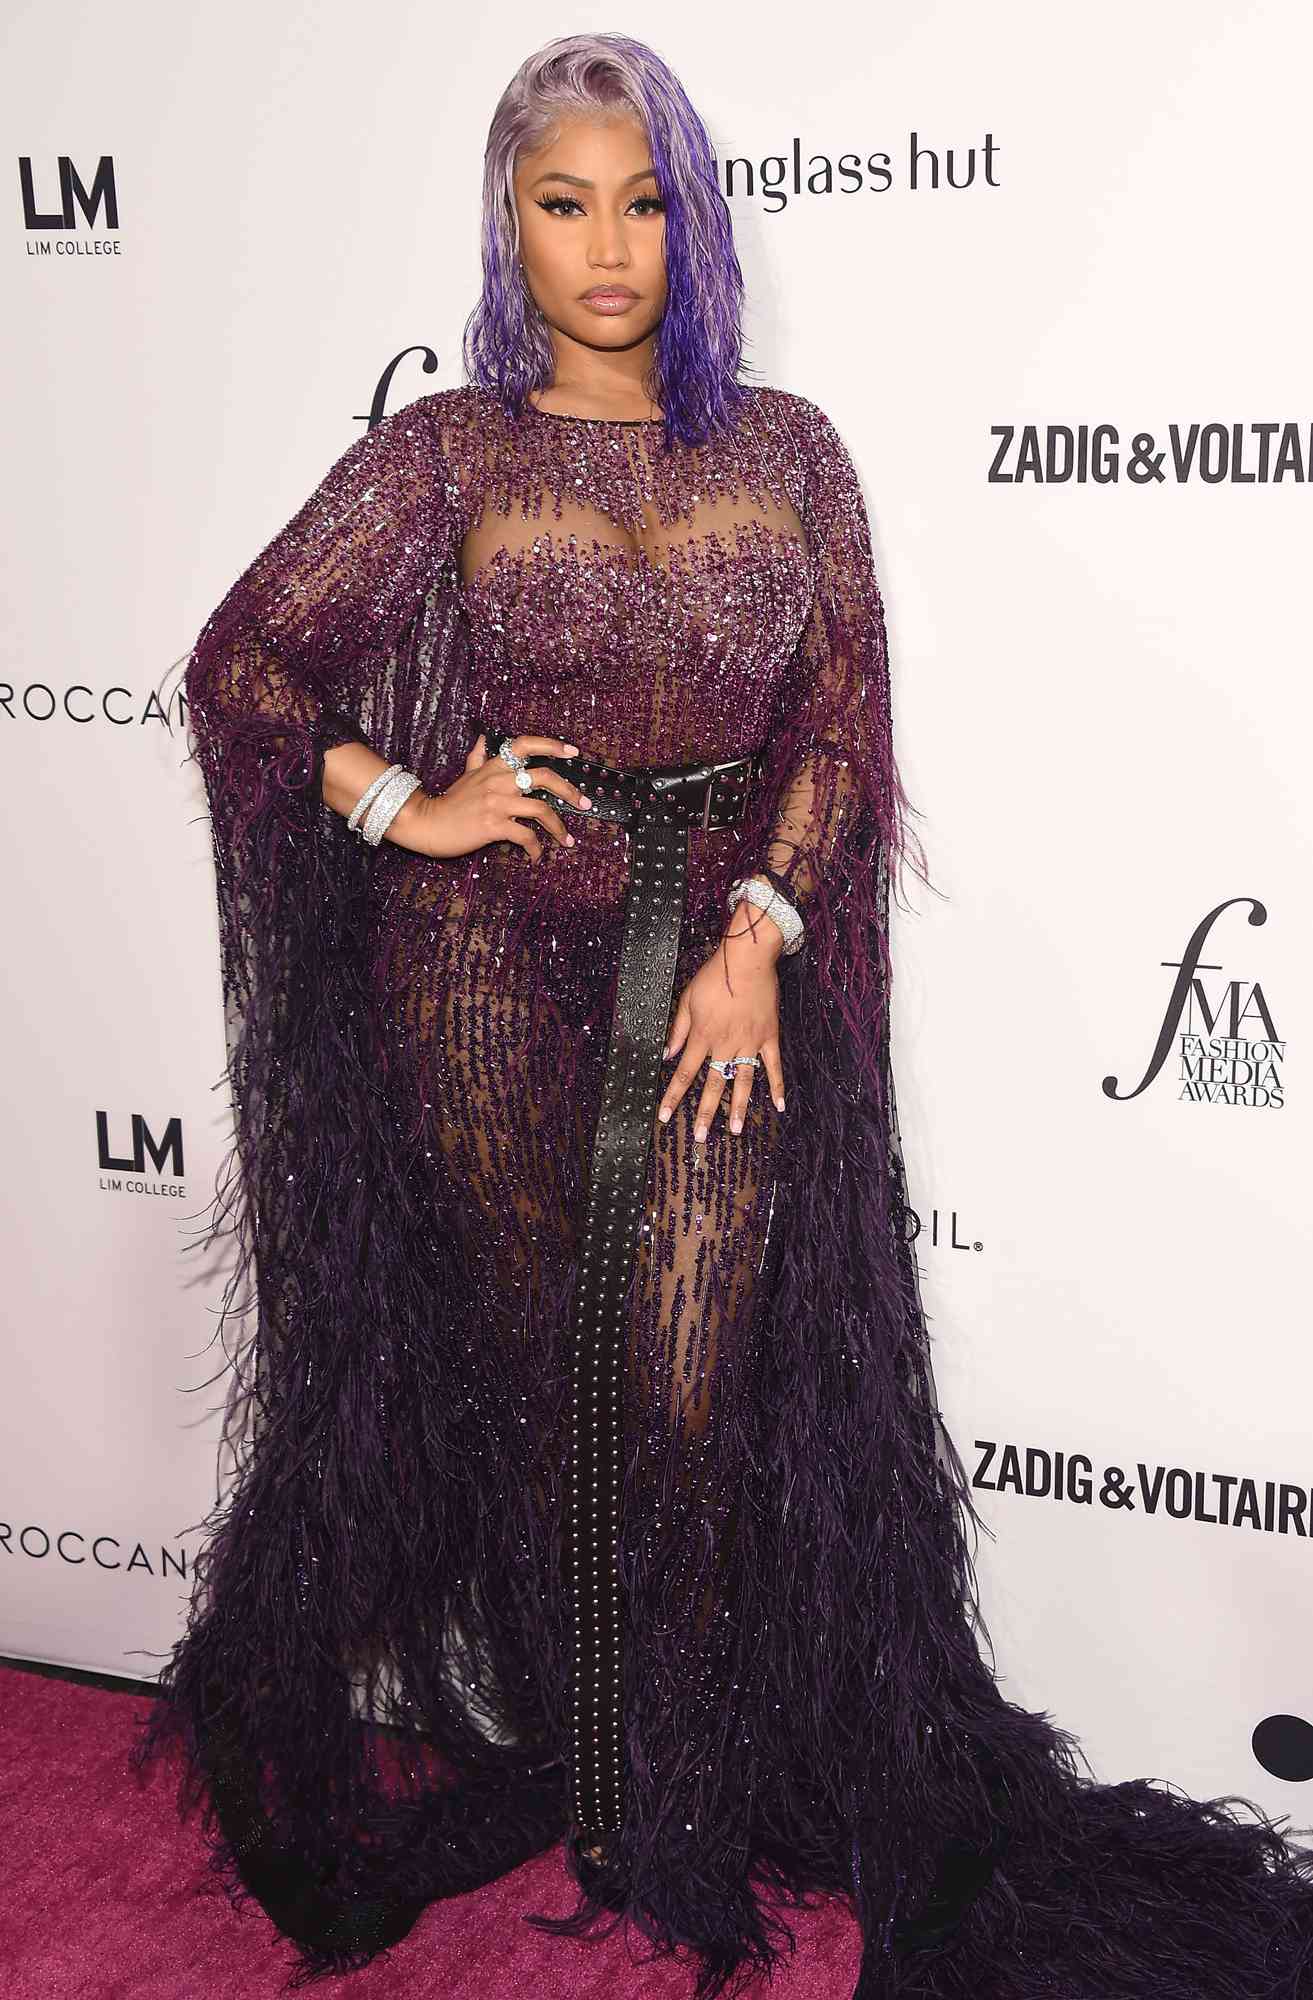 Nicki Minaj attends the Daily Front Row's 2018 Fashion Media Awards at Park Hyatt New York on September 6, 2018 in New York City